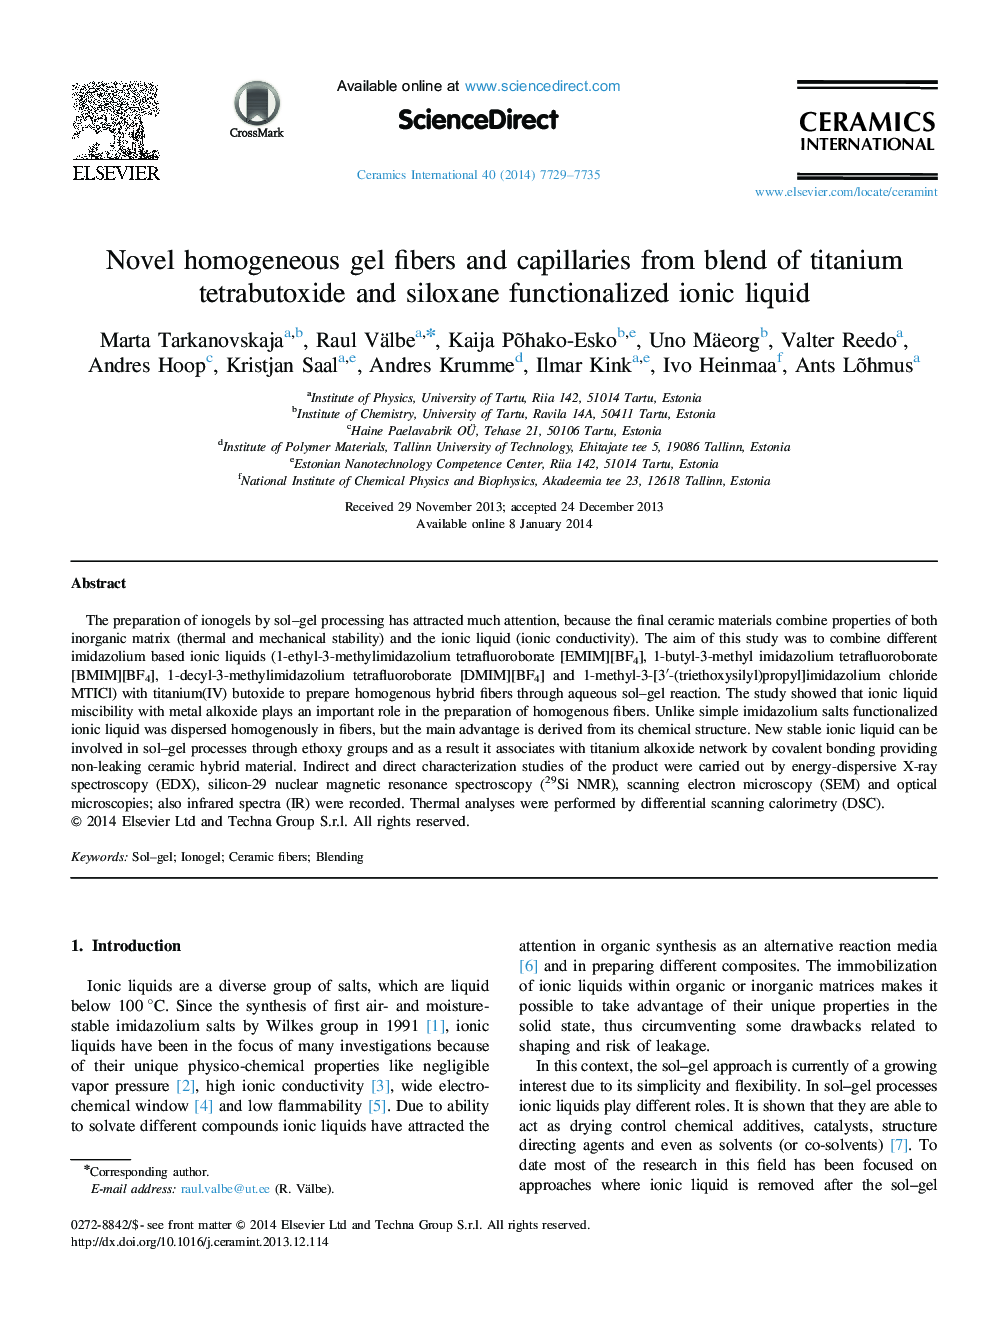 Novel homogeneous gel fibers and capillaries from blend of titanium tetrabutoxide and siloxane functionalized ionic liquid